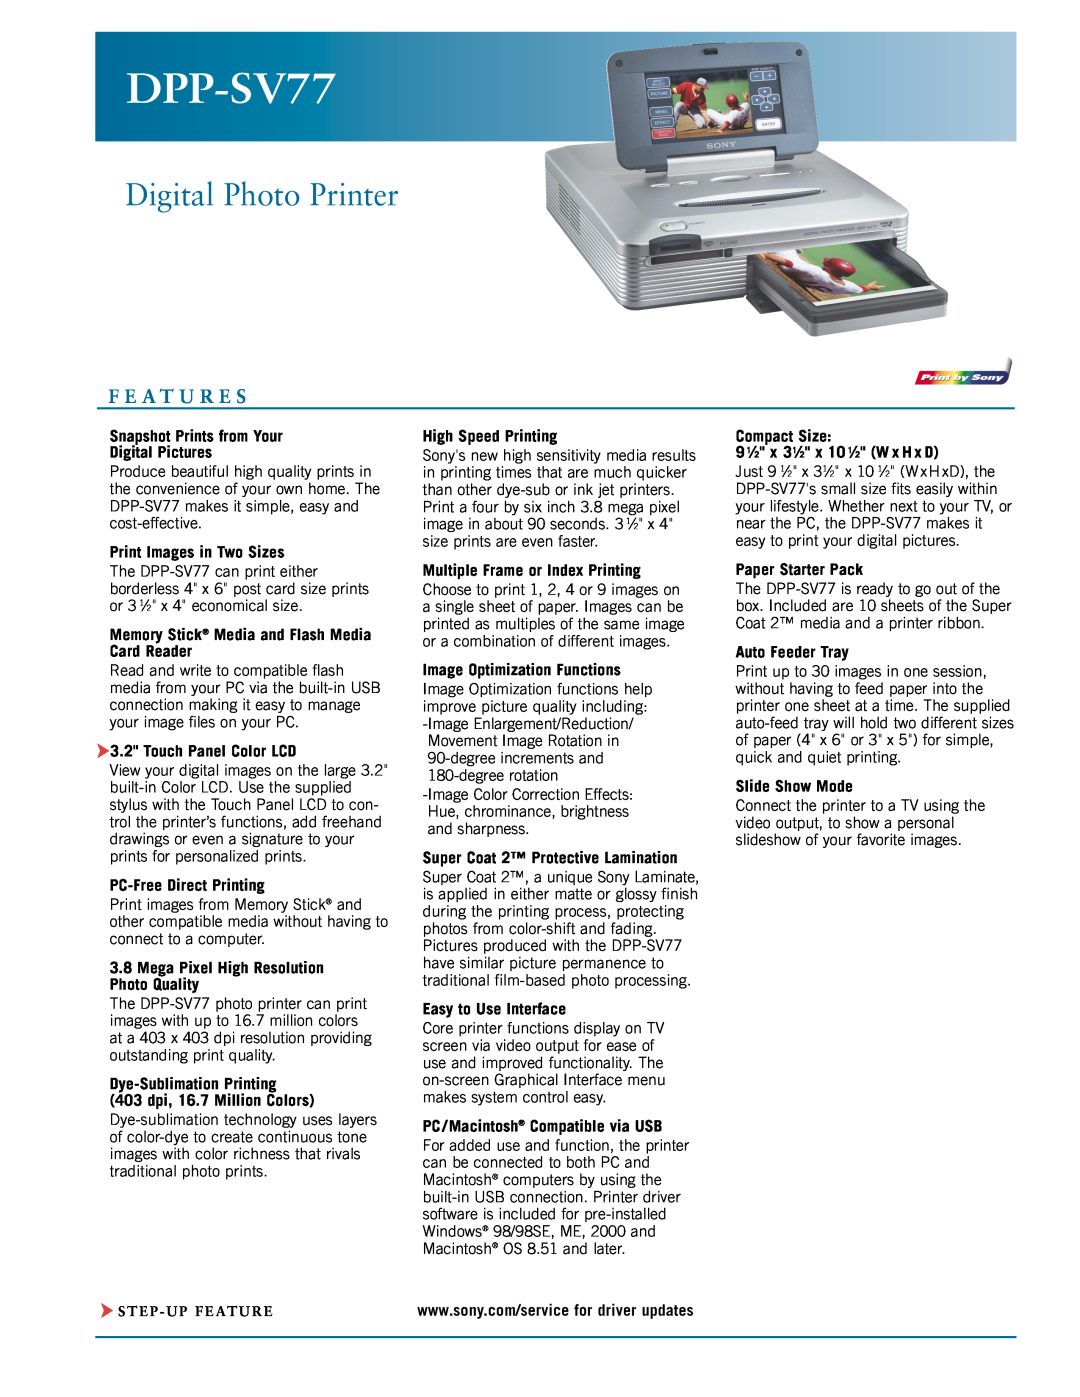 Sony DPP-SV77 manual F E A T U R E S, Digital Photo Printer 